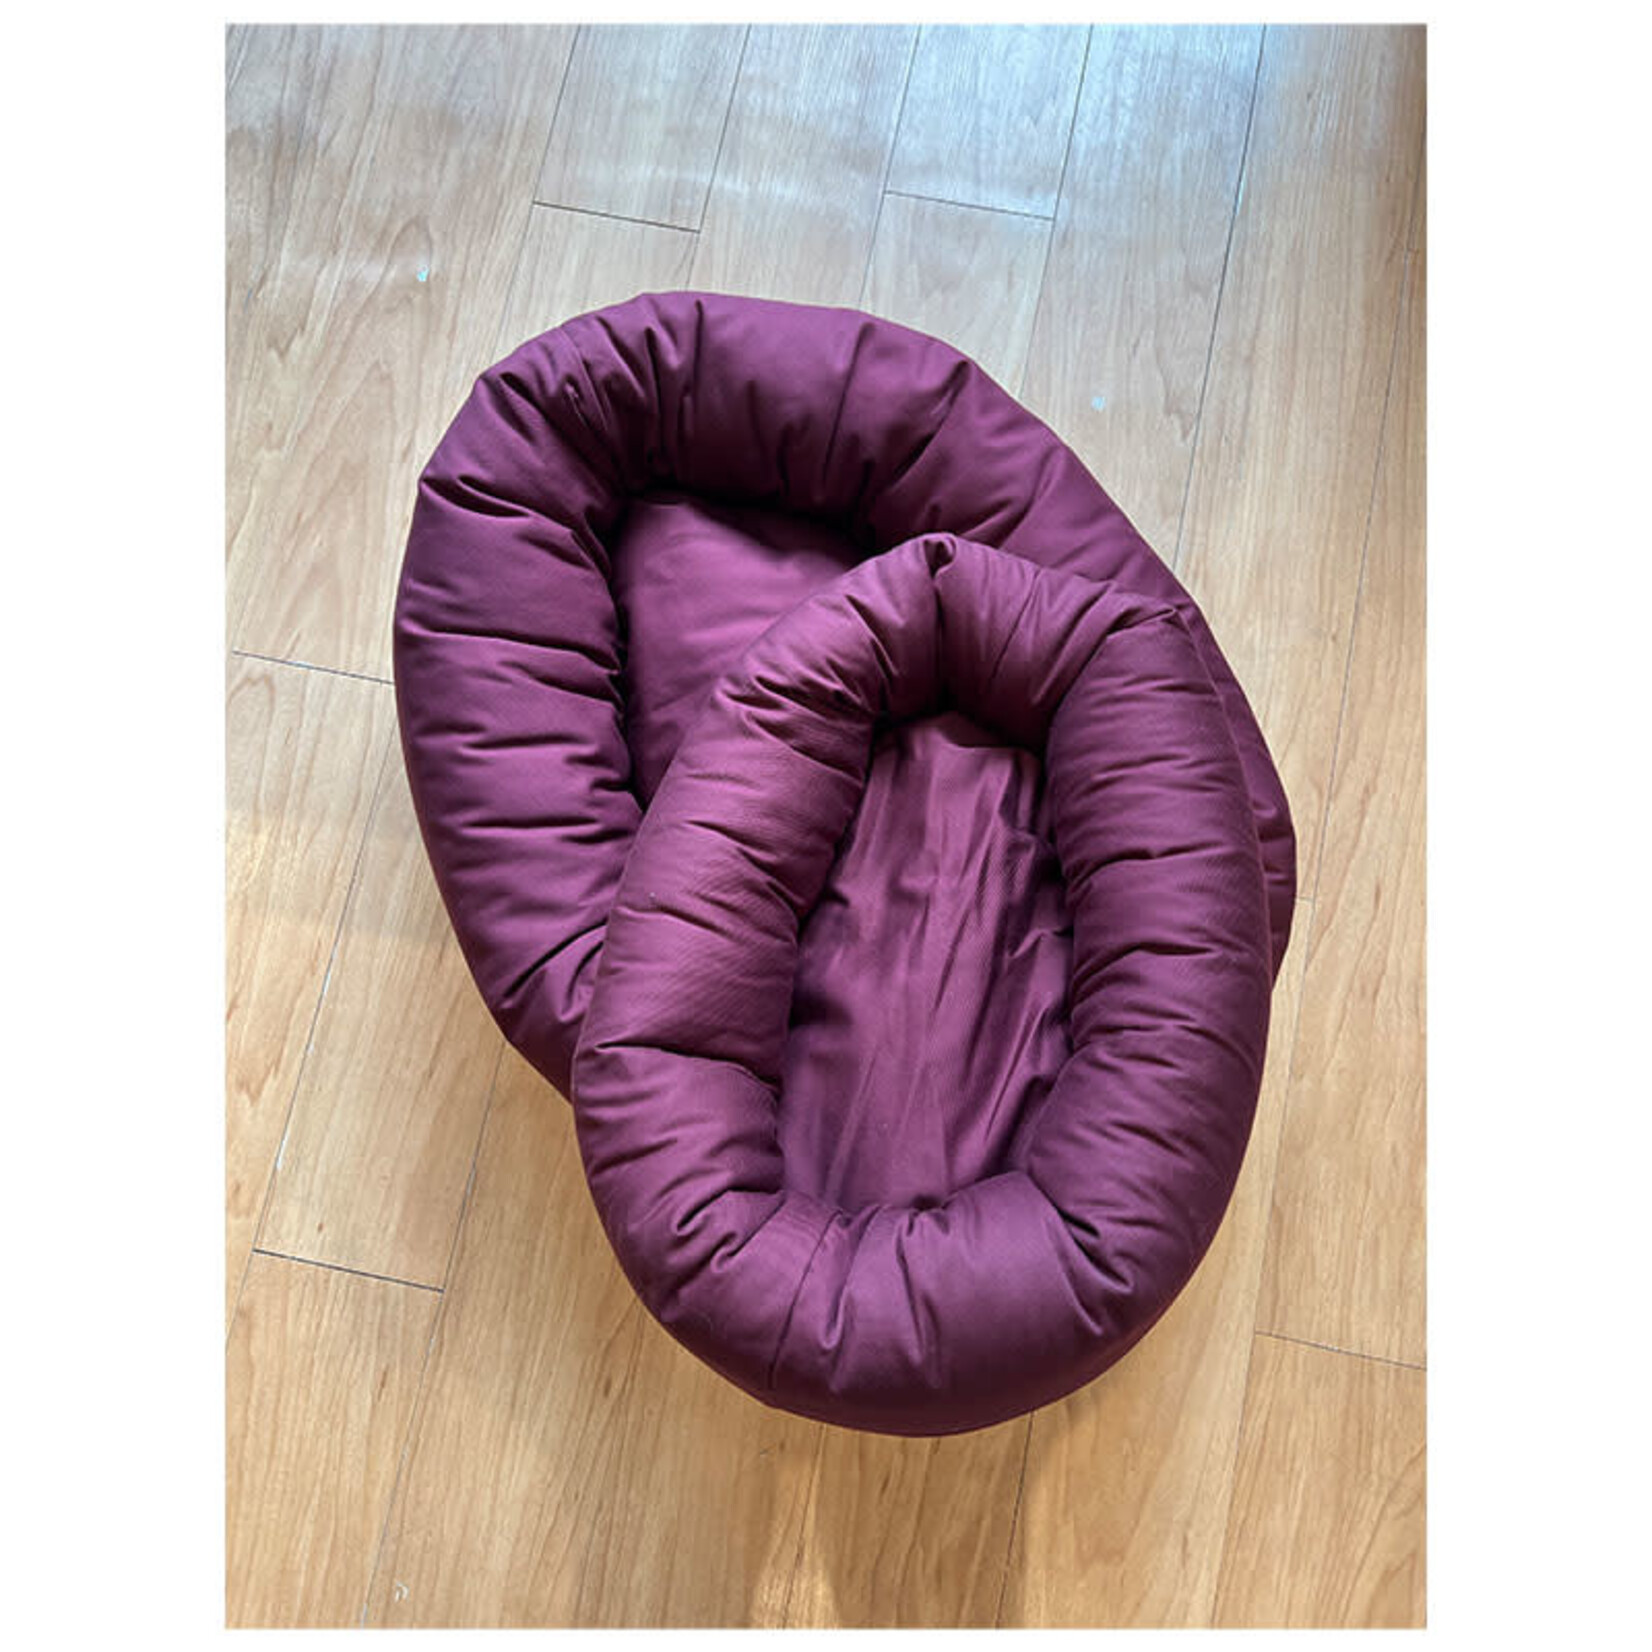 Aviva Designs Ltd. Aviva Designs - Oval Donut Bed - Cerise